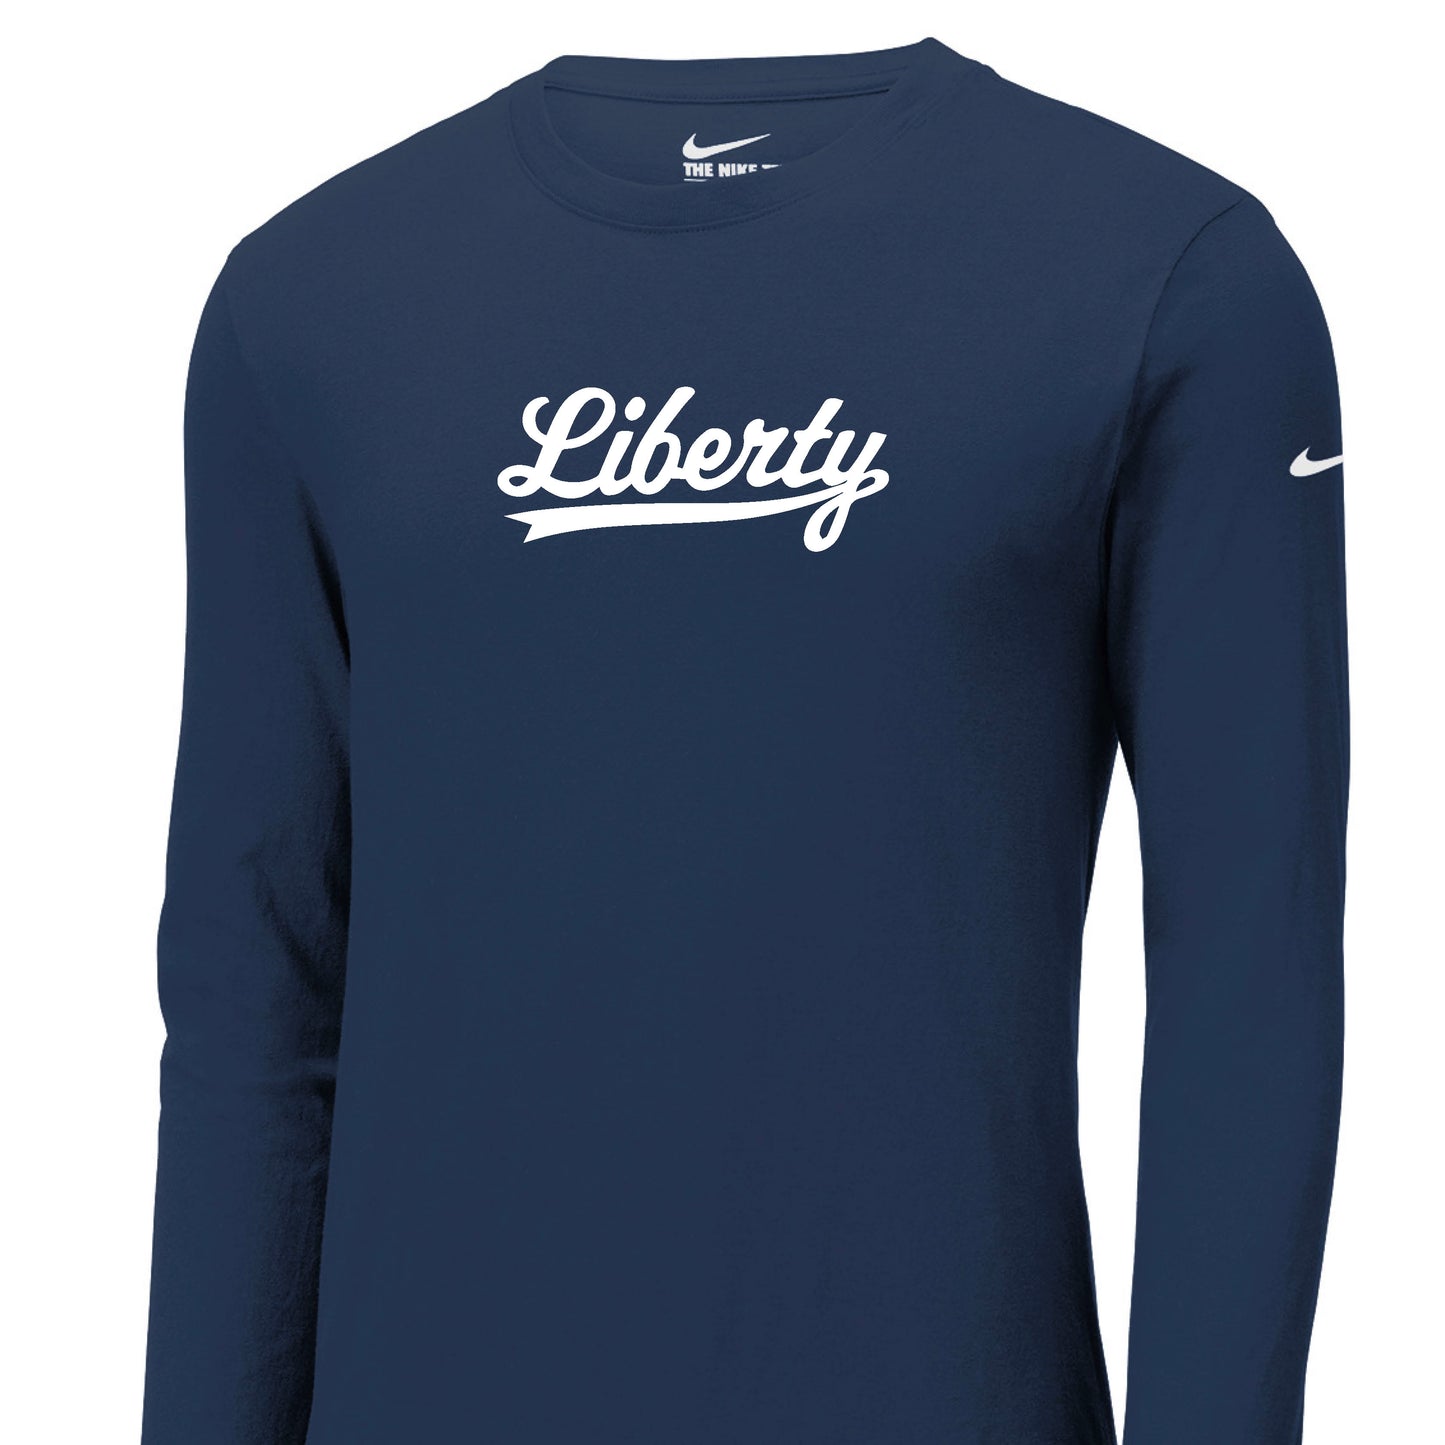 Liberty Long Sleeve Navy Nike Shirt